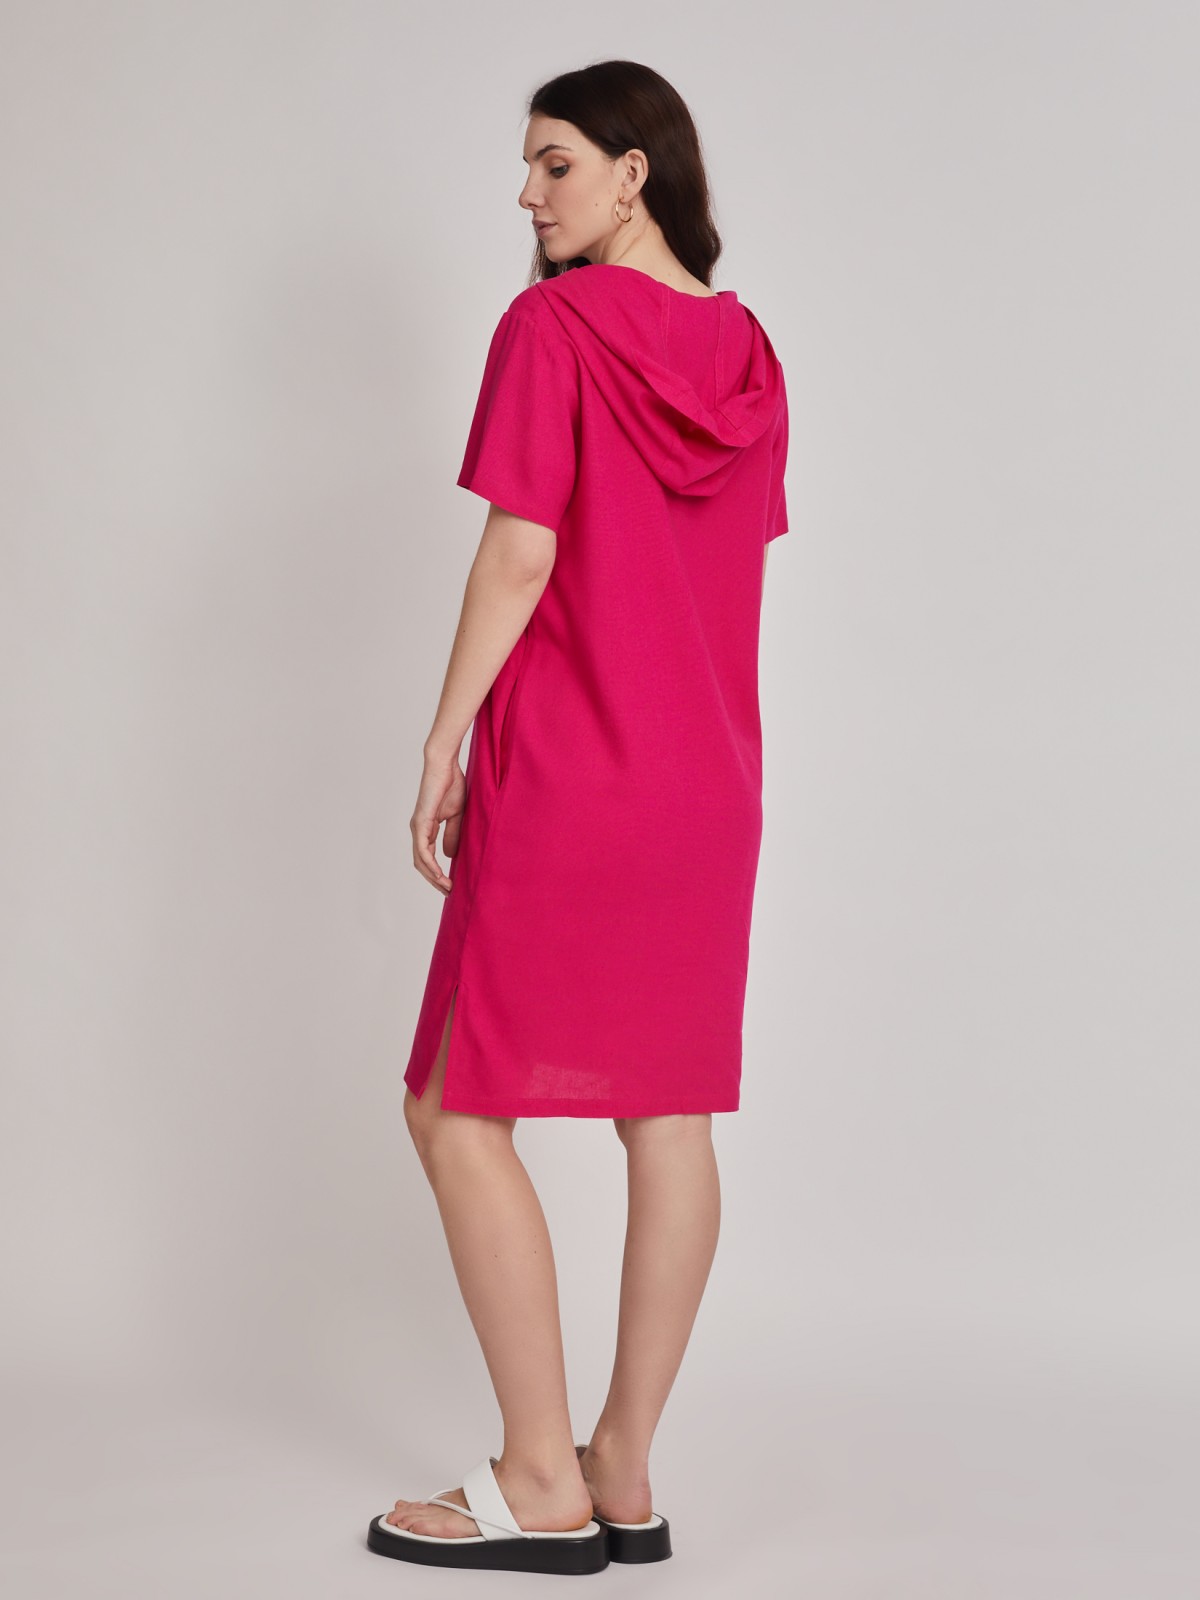 Платье-футболка из льна с капюшоном zolla 223238262101, цвет фуксия, размер XS - фото 6